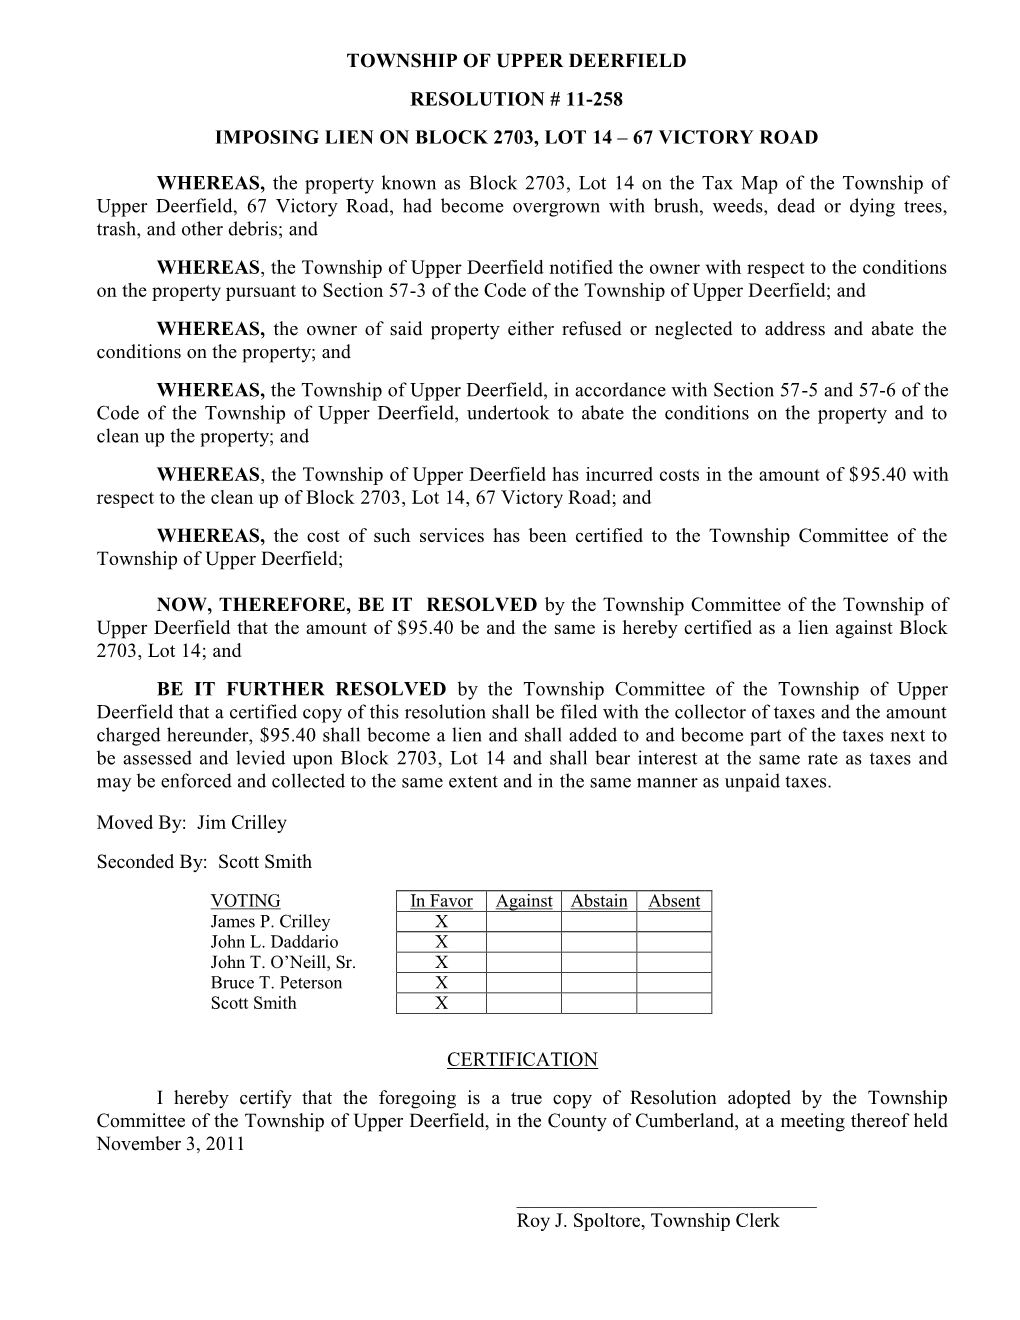 Township of Upper Deerfield Resolution # 11-258 Imposing